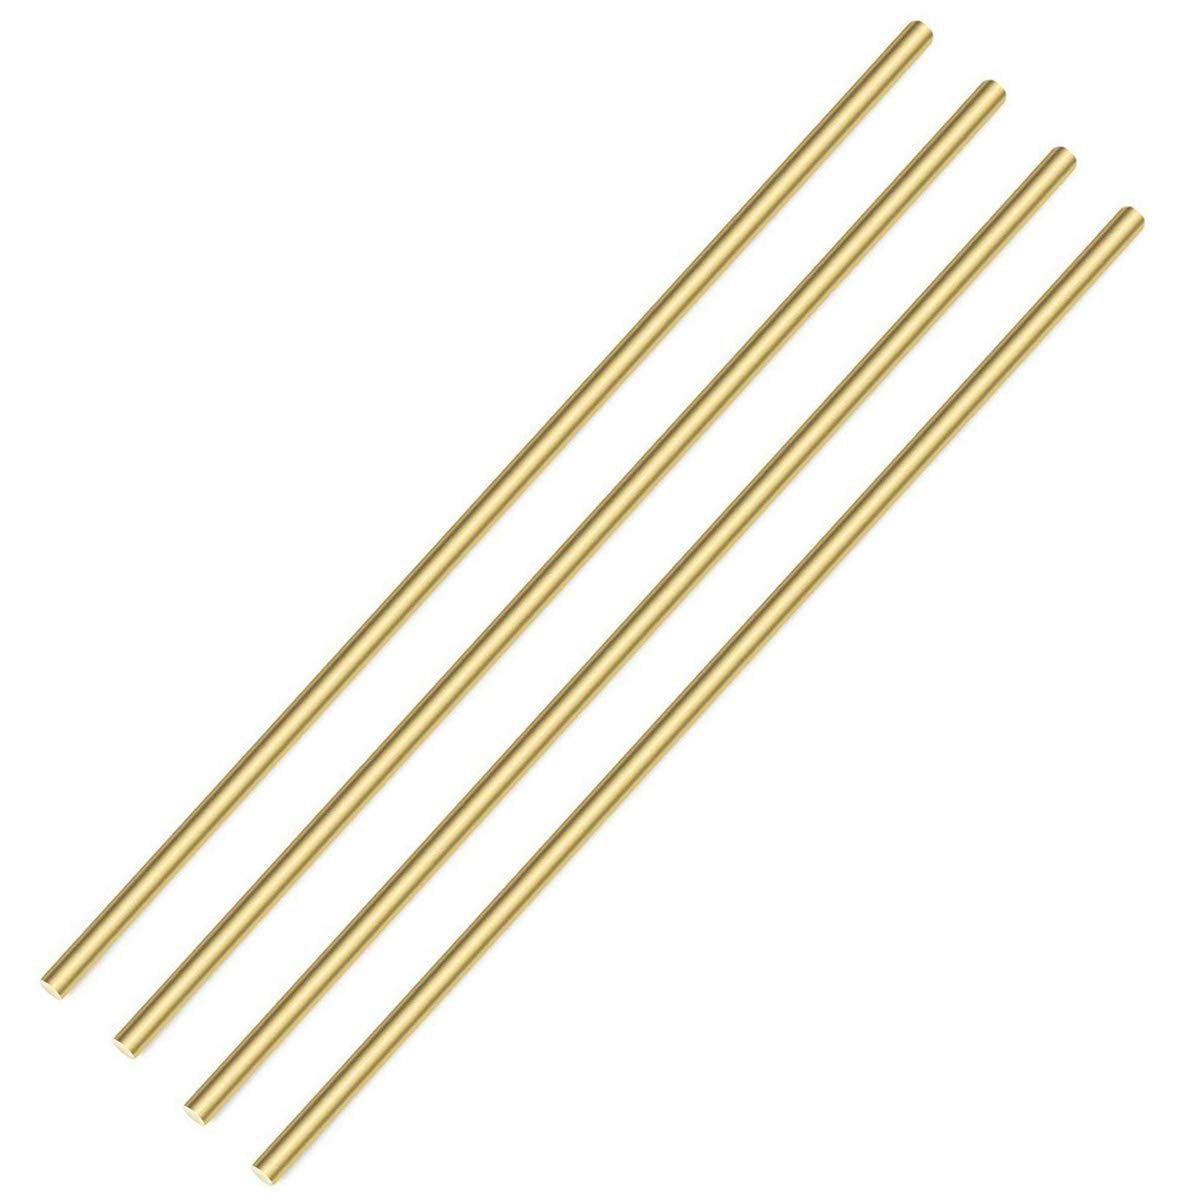 8 PCS 4Mm/ 5/32 Inch Brass Rod Brass round Stock Lathe Bar Stock Kit Brass Rod Stock Solid Brass Rod, 4Mm/ 5/32 Inch Diameter 12 Inch in Length